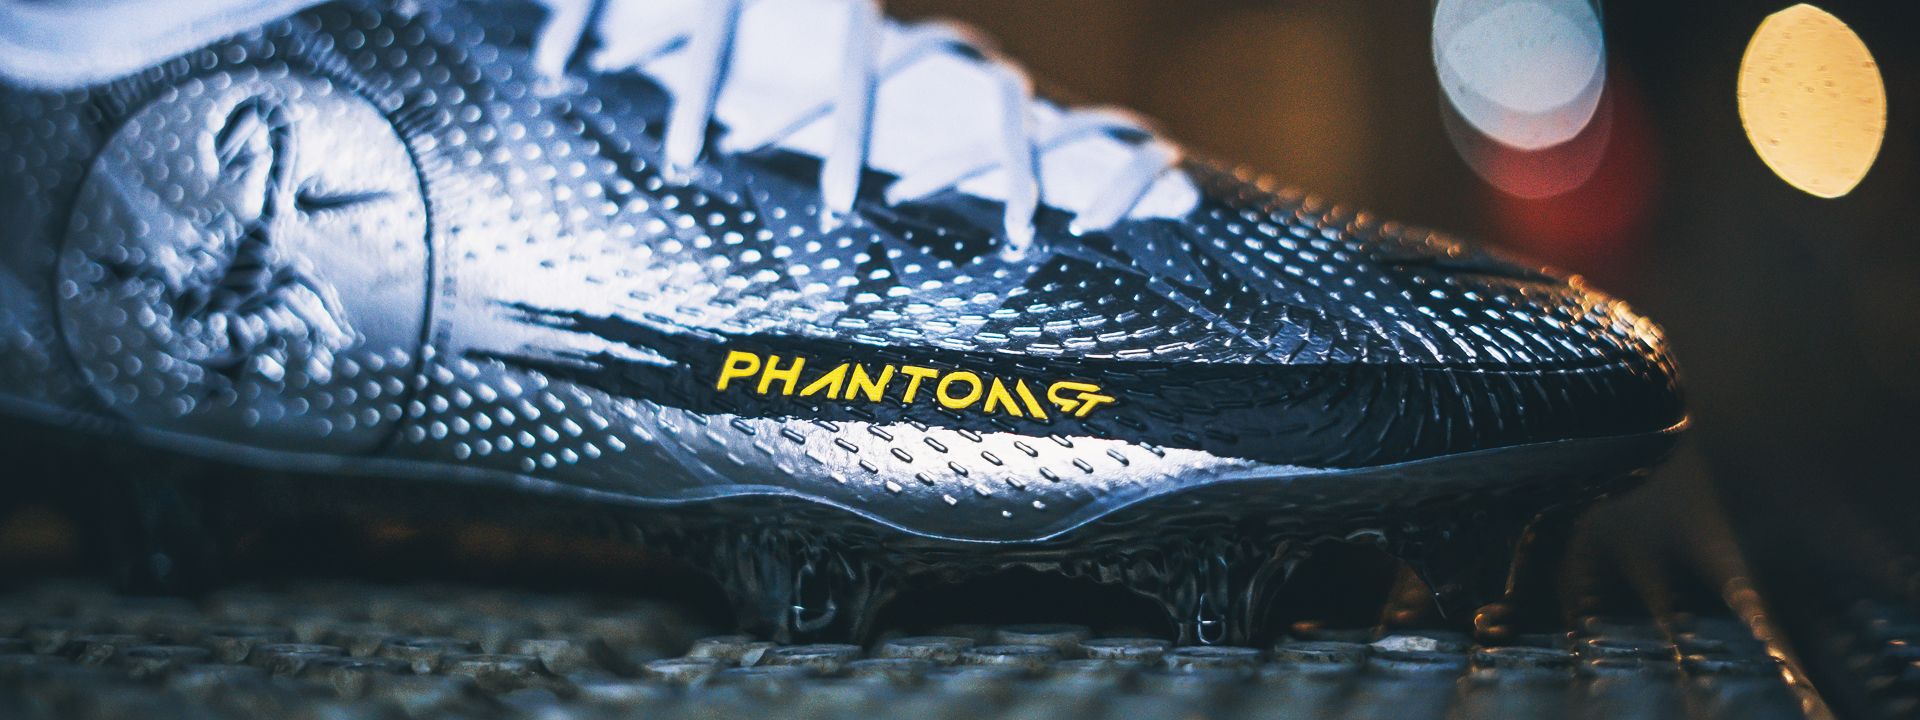 Nike-PhantomGT-Scorpion-sliderheader-1920x720-foto2.jpg